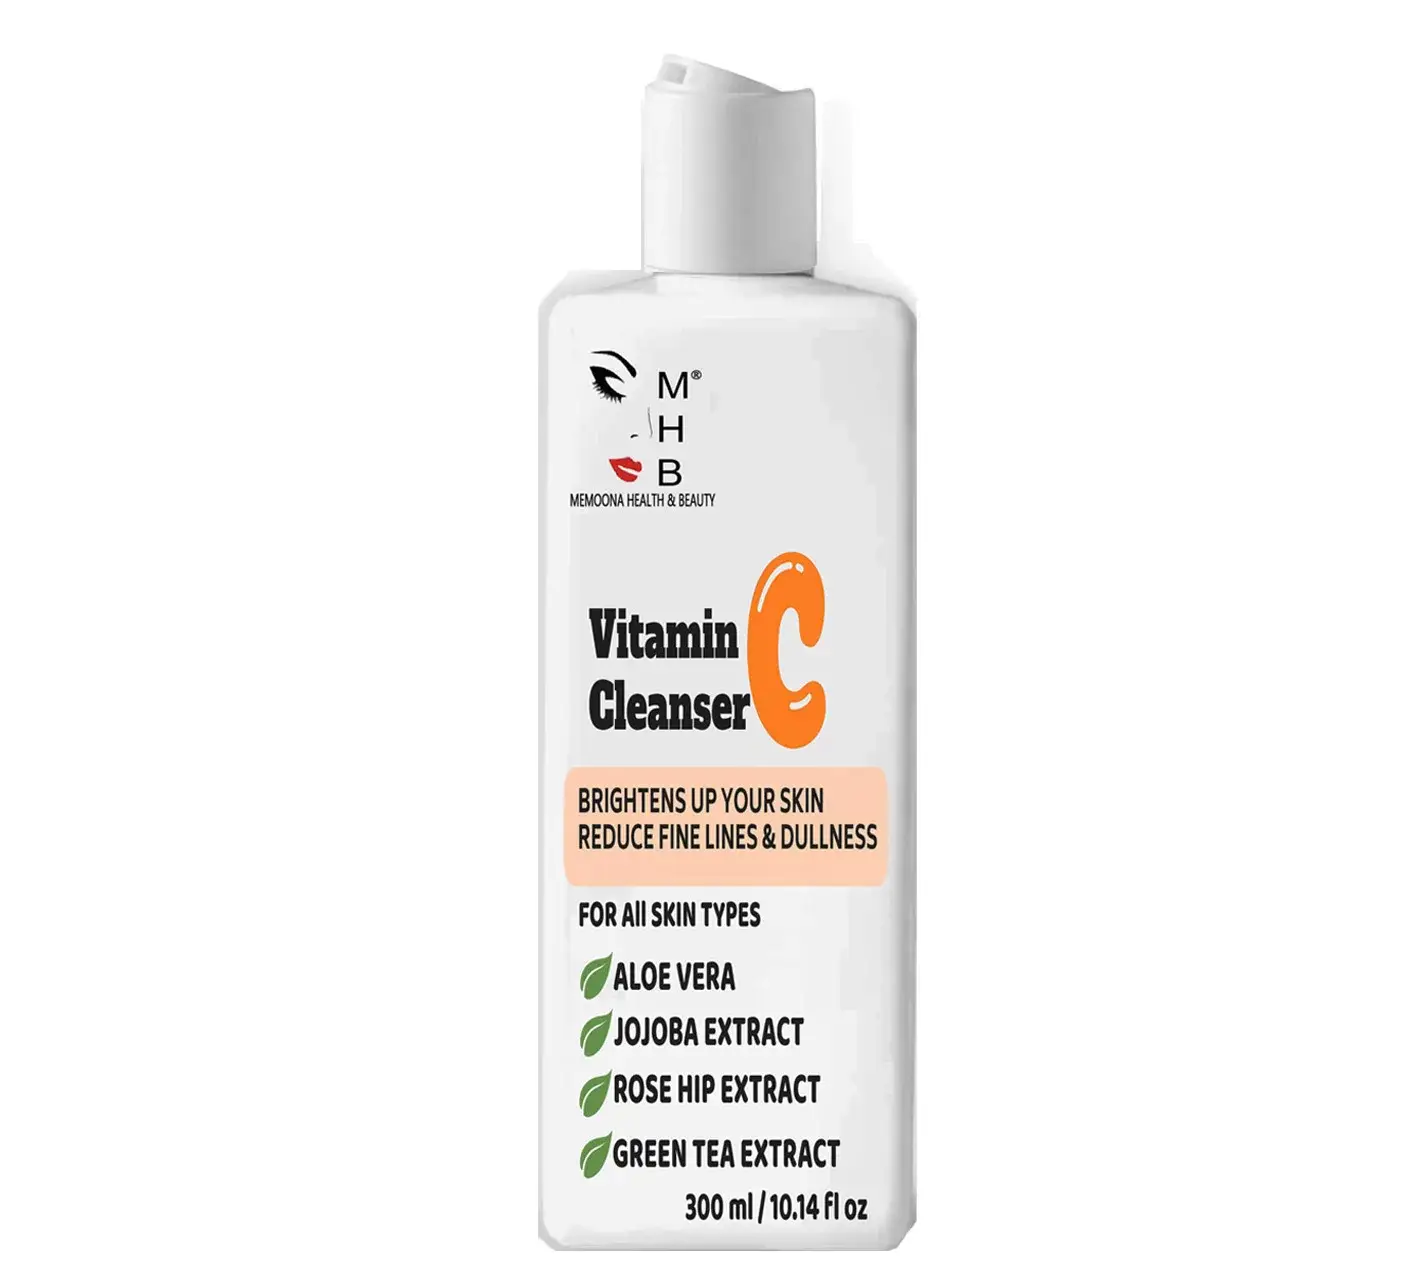 MHB Vitamin C Cleanser